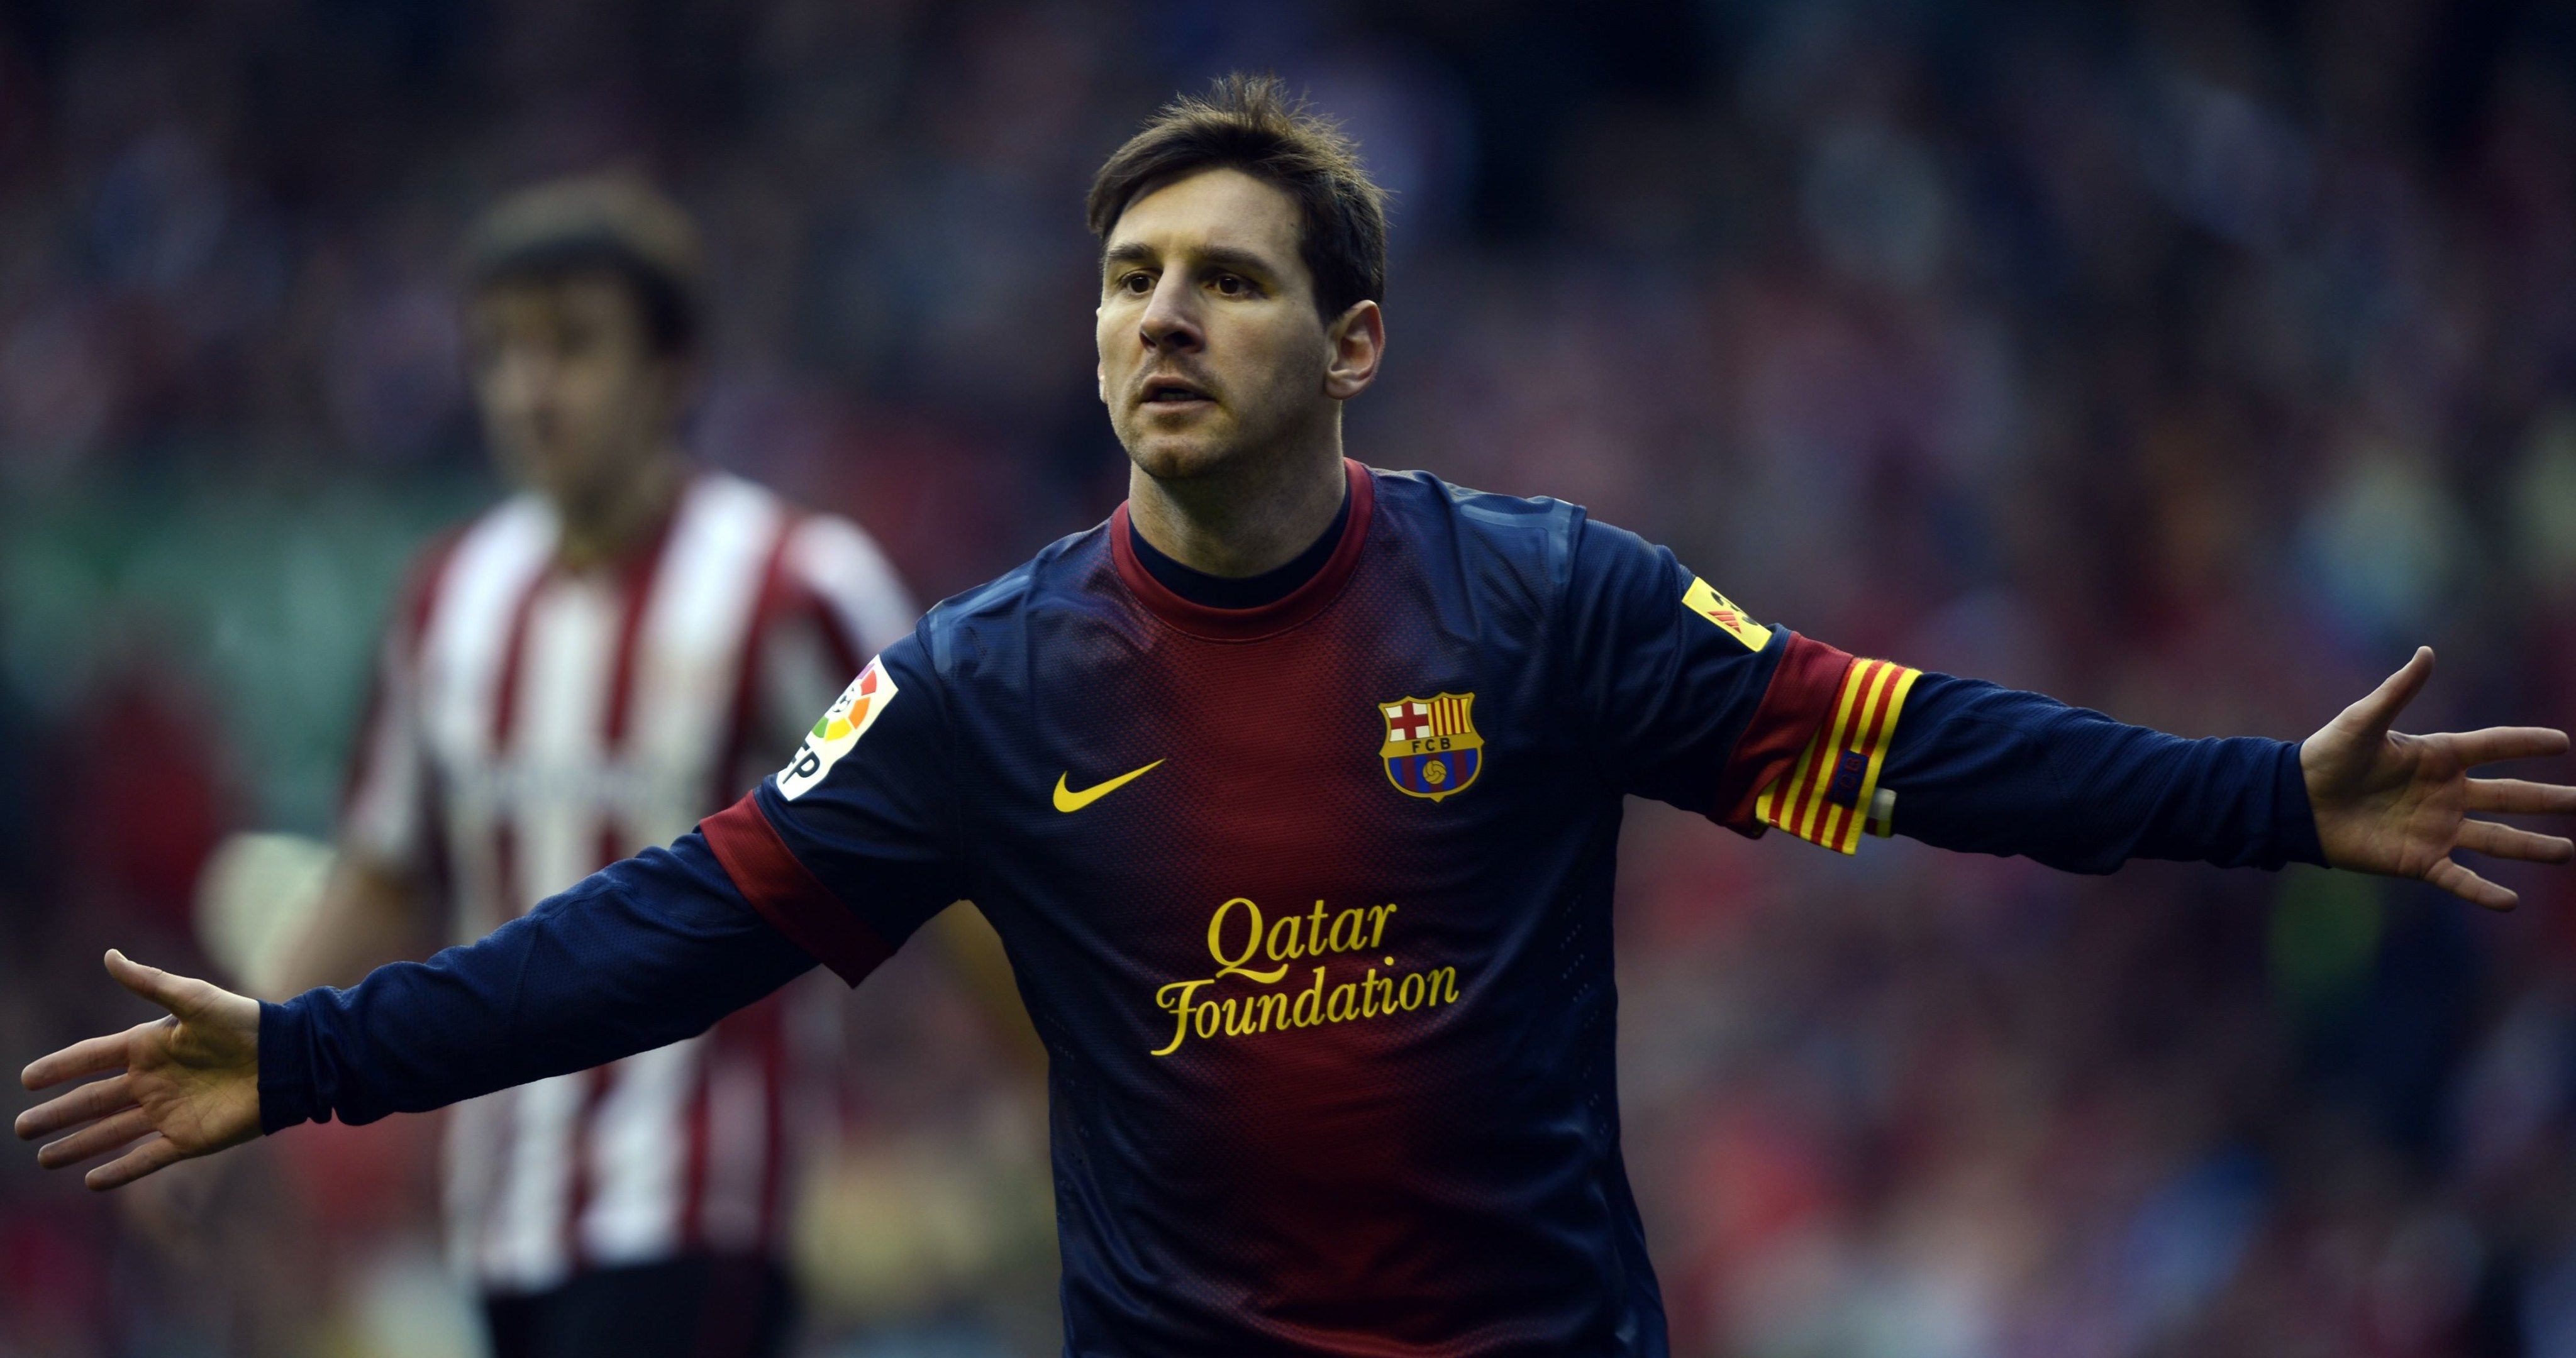 messi barcelona 4k ultra HD wallpaper. Lionel messi, Messi, Barcelona soccer